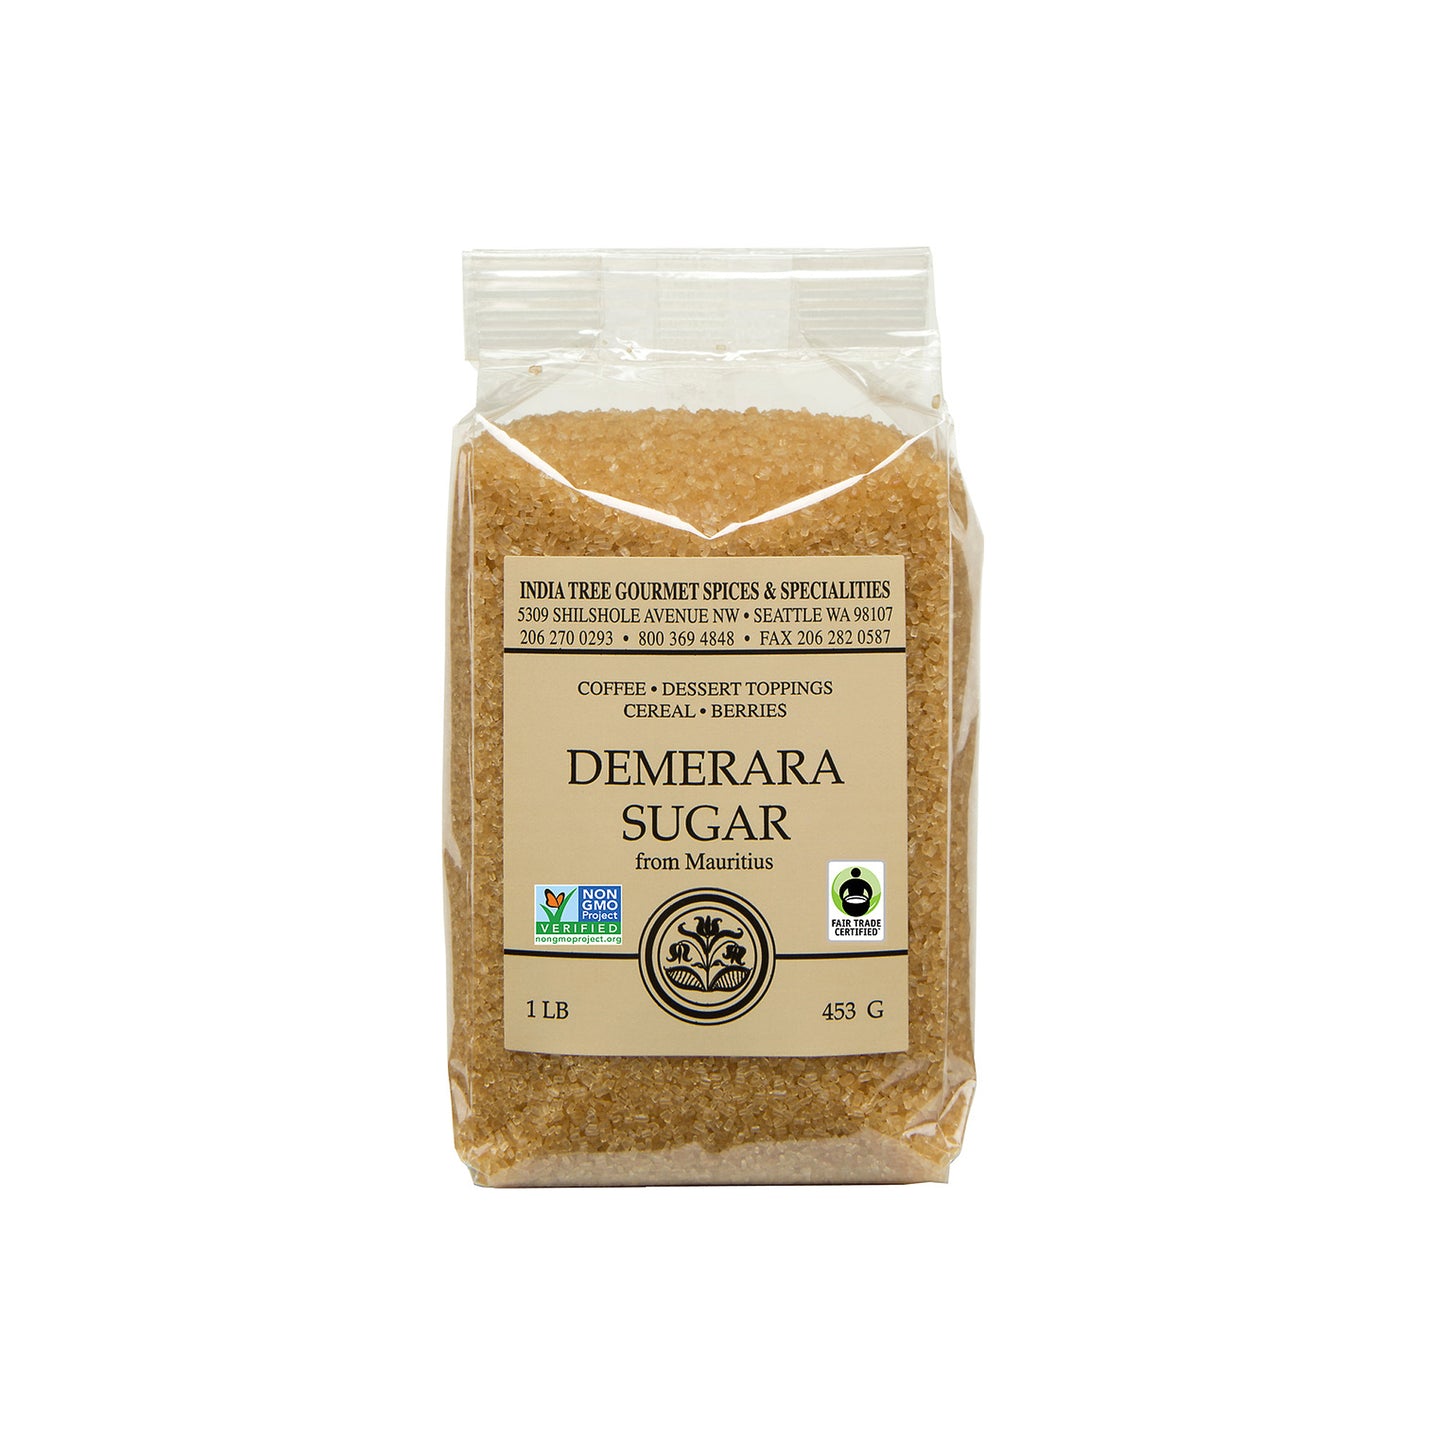 India Tree Demerara Sugar from Mauritius - 1 lb